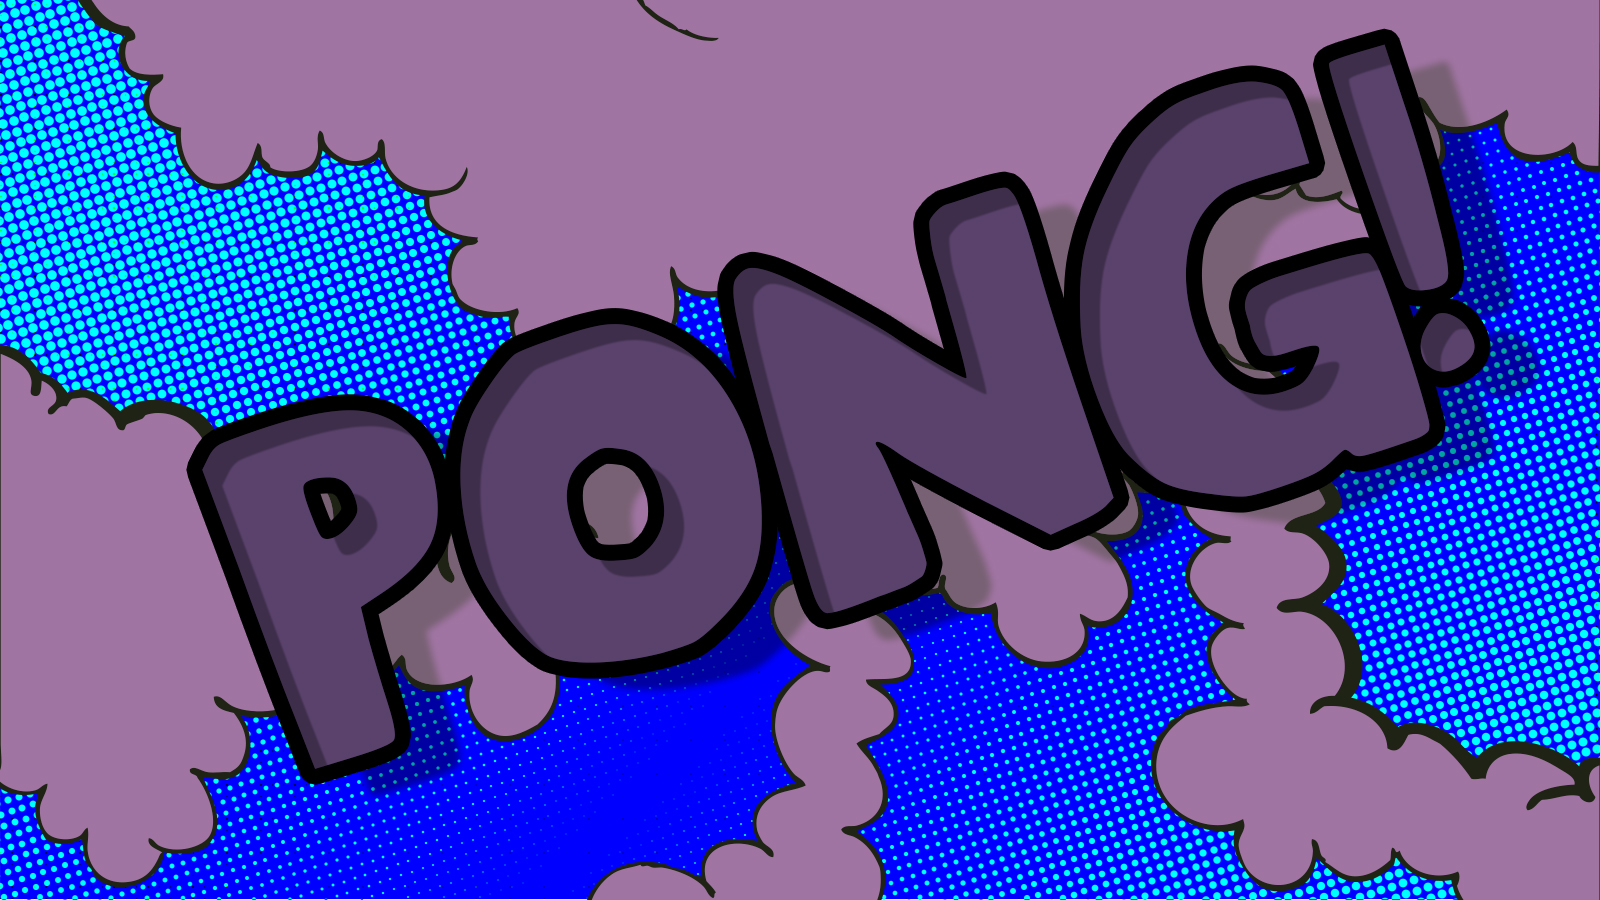 Stink bomb pong